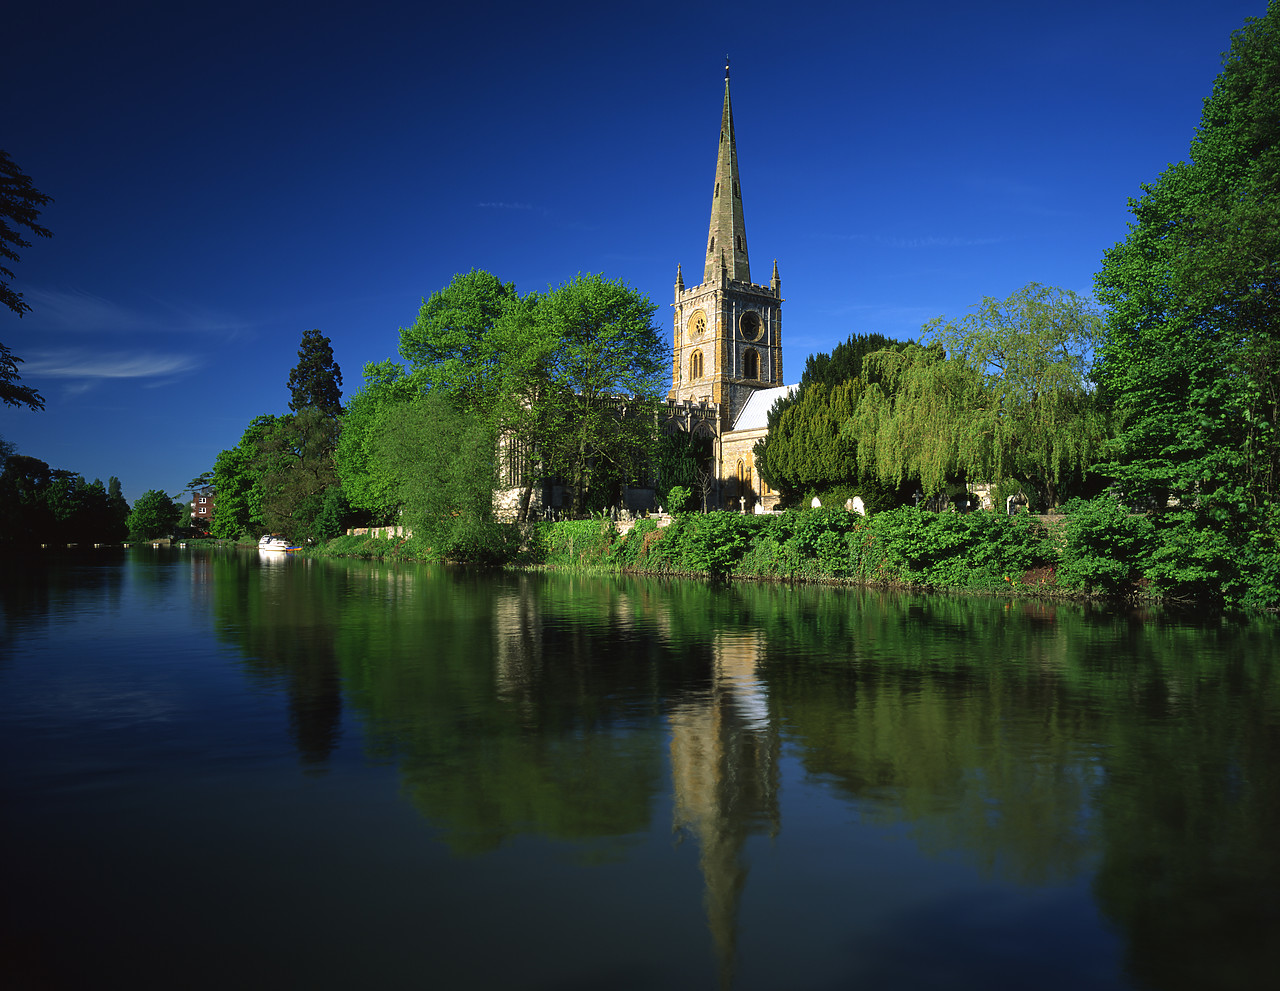 #010630-3 - Holy Trinity Church, Stratford-upon-Avon, Warwickshire, England